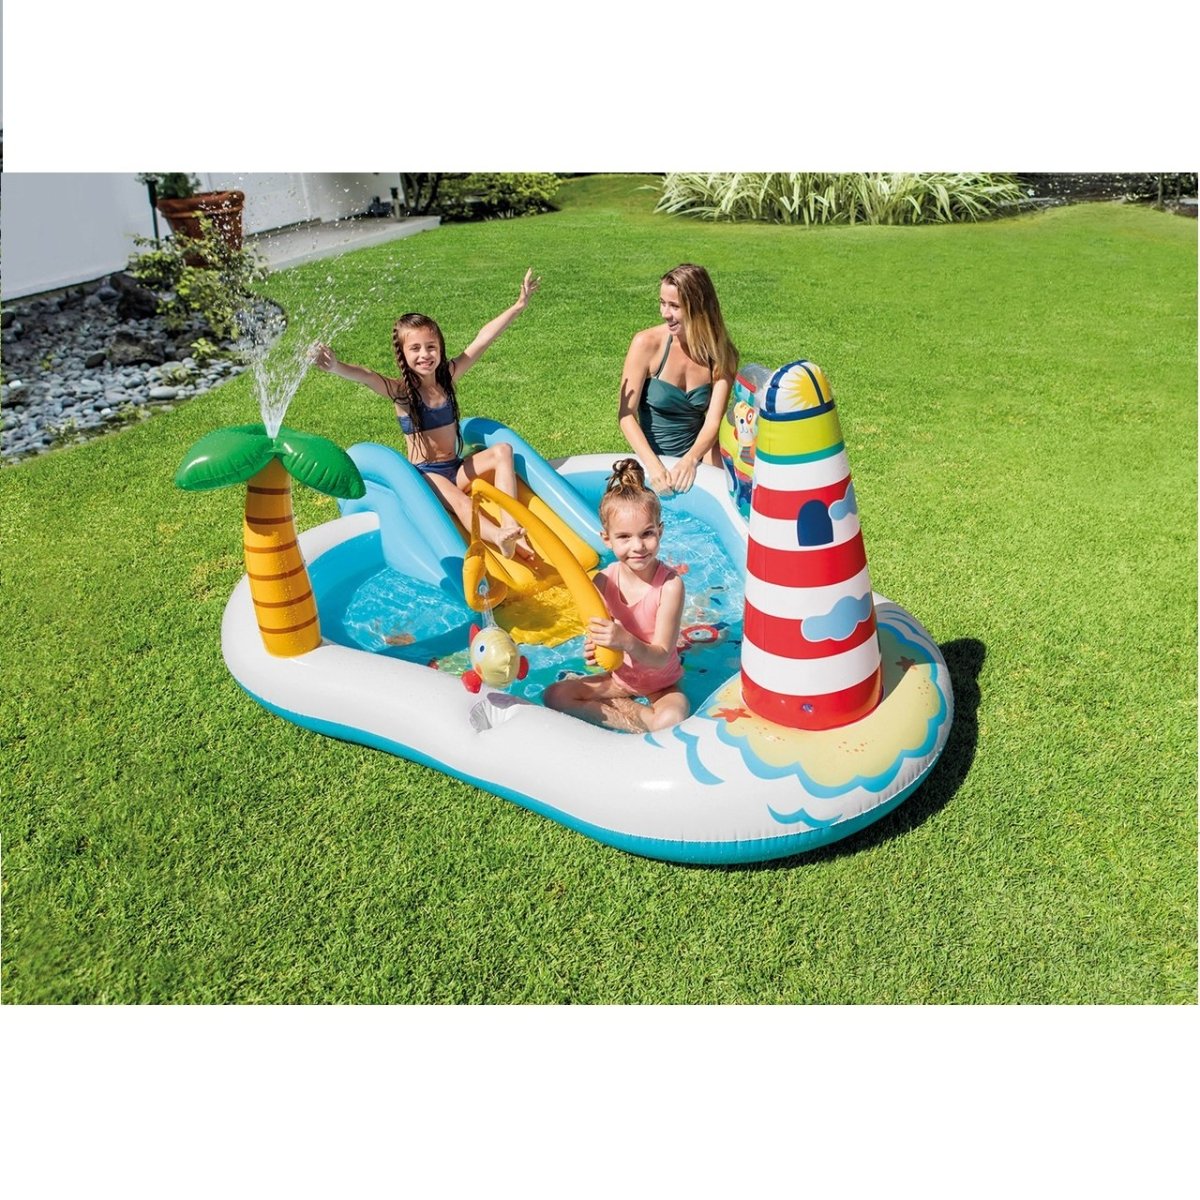 Fishing Fun Play Center Inflatable Kiddie Pool 57162NP